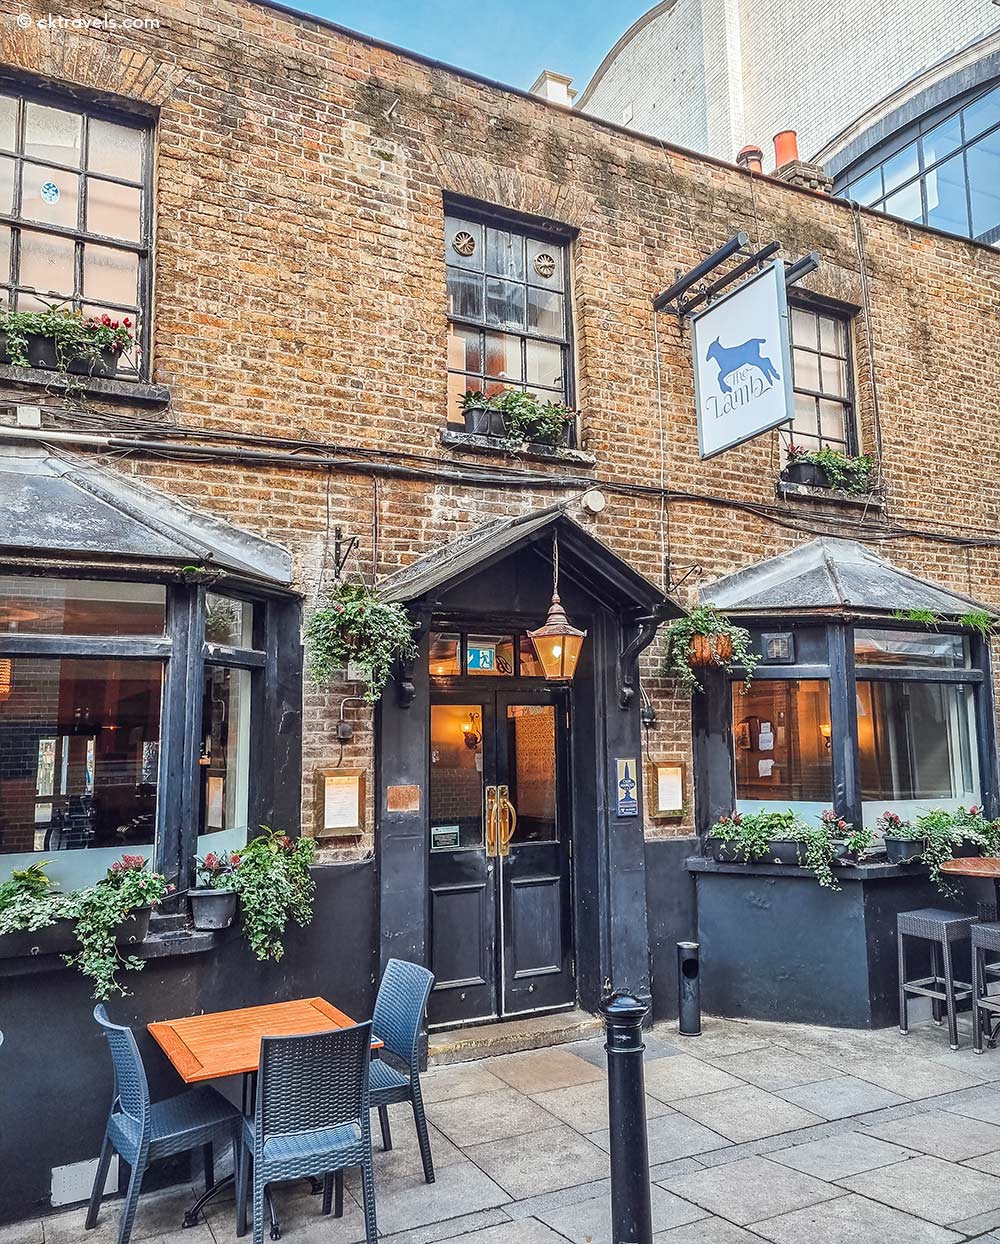 The Lamb pub in Chiswick London